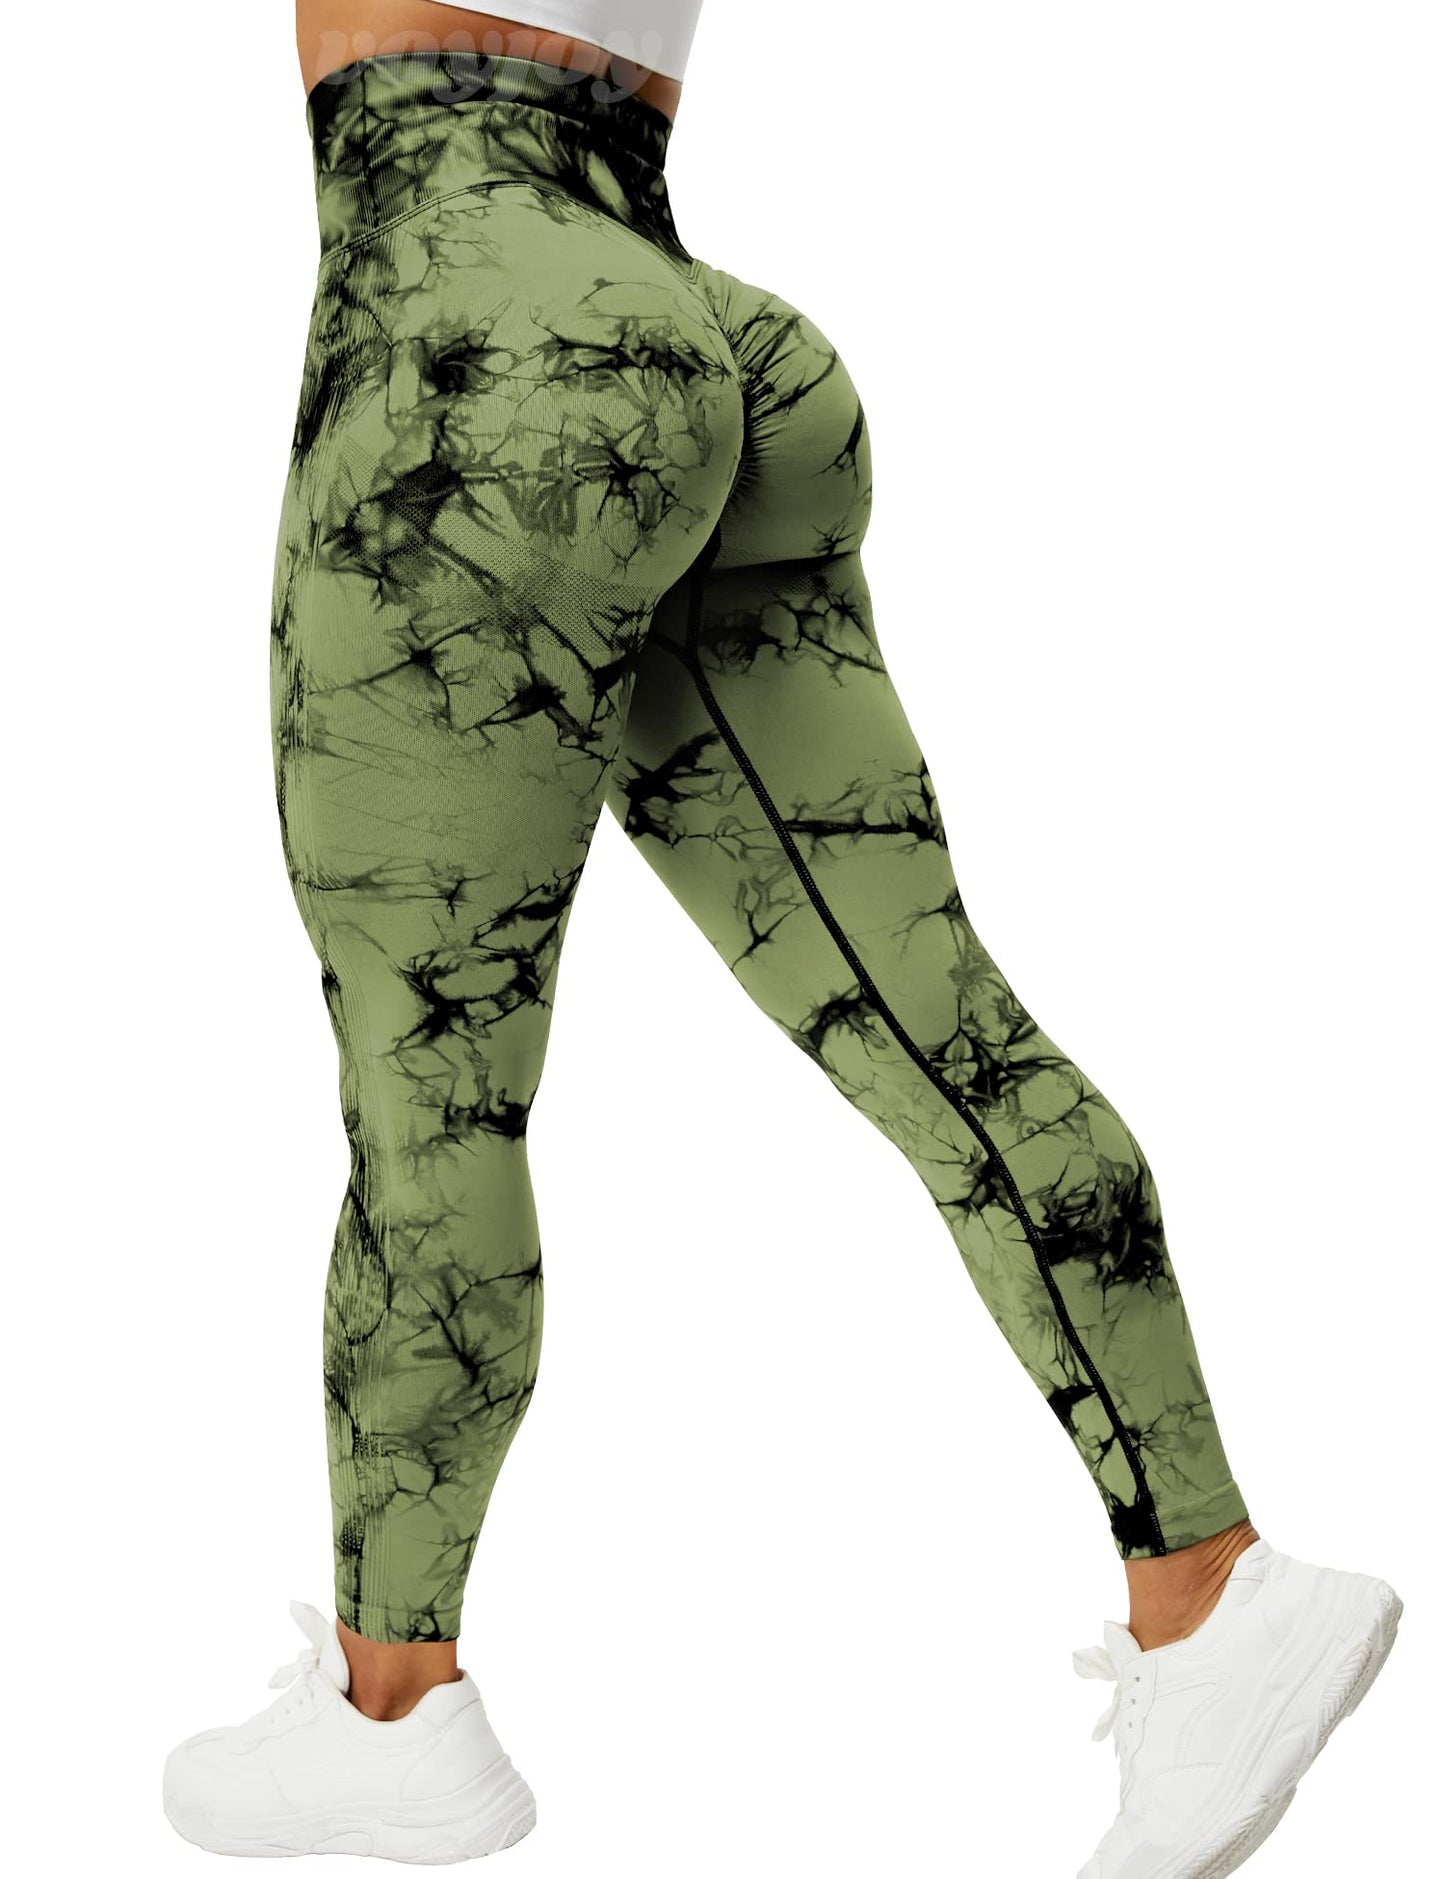 VOYJOY Tie Dye Seamless Leggings for Women High Waist Yoga Pants, Scrunch Butt Lifting Elastic Tights Army Green